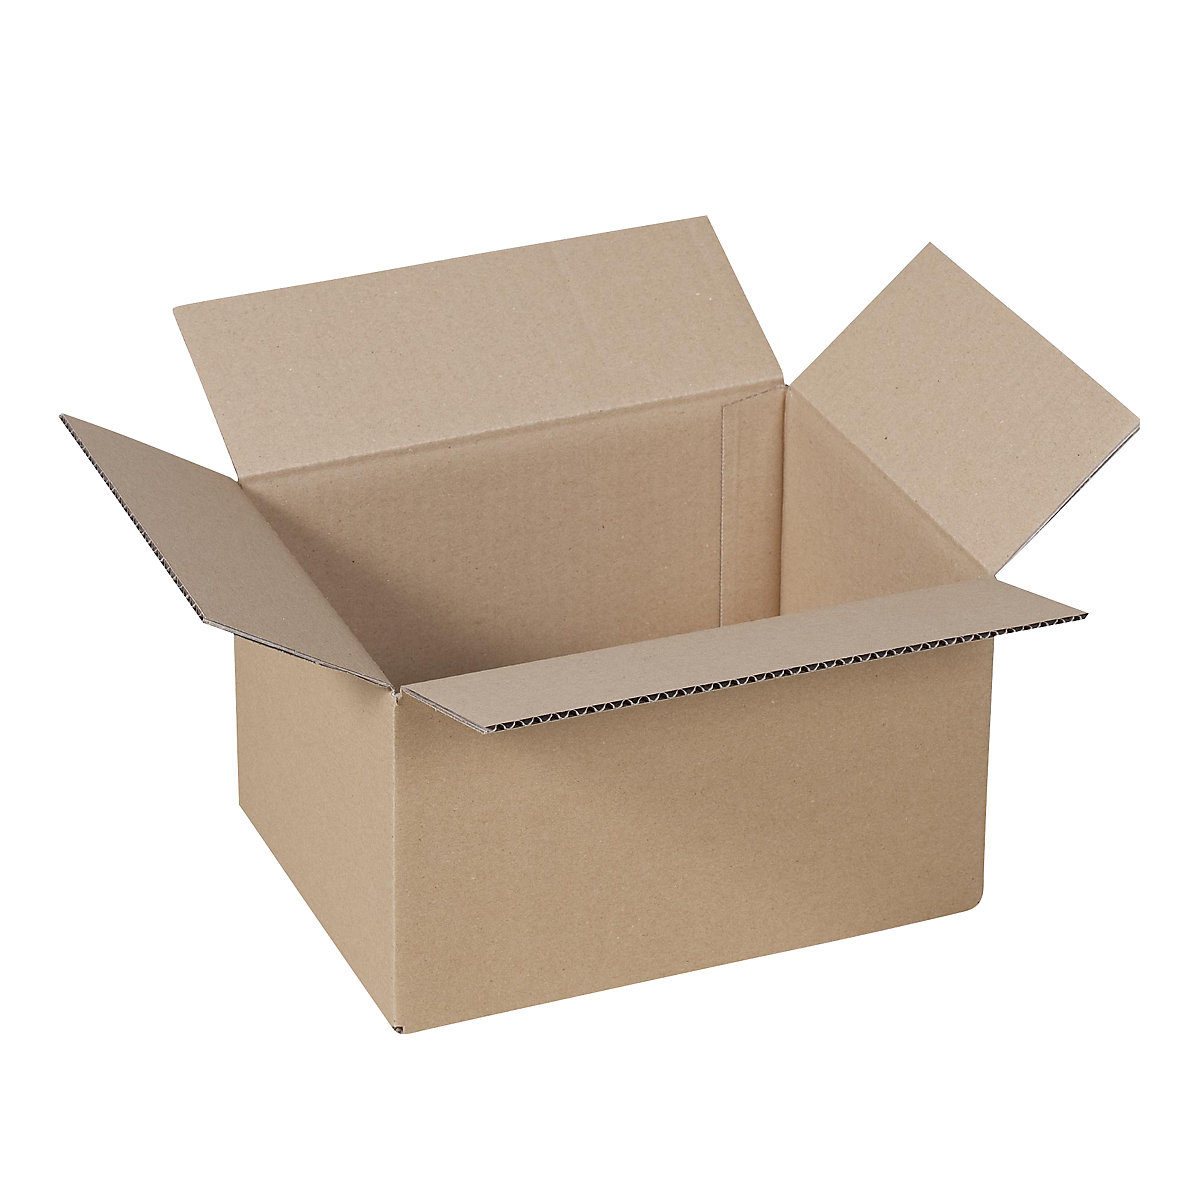 Folding cardboard box, FEFCO 0201, made of single fluted cardboard, internal dimensions 200 x 140 x 120 mm, pack of 50-19